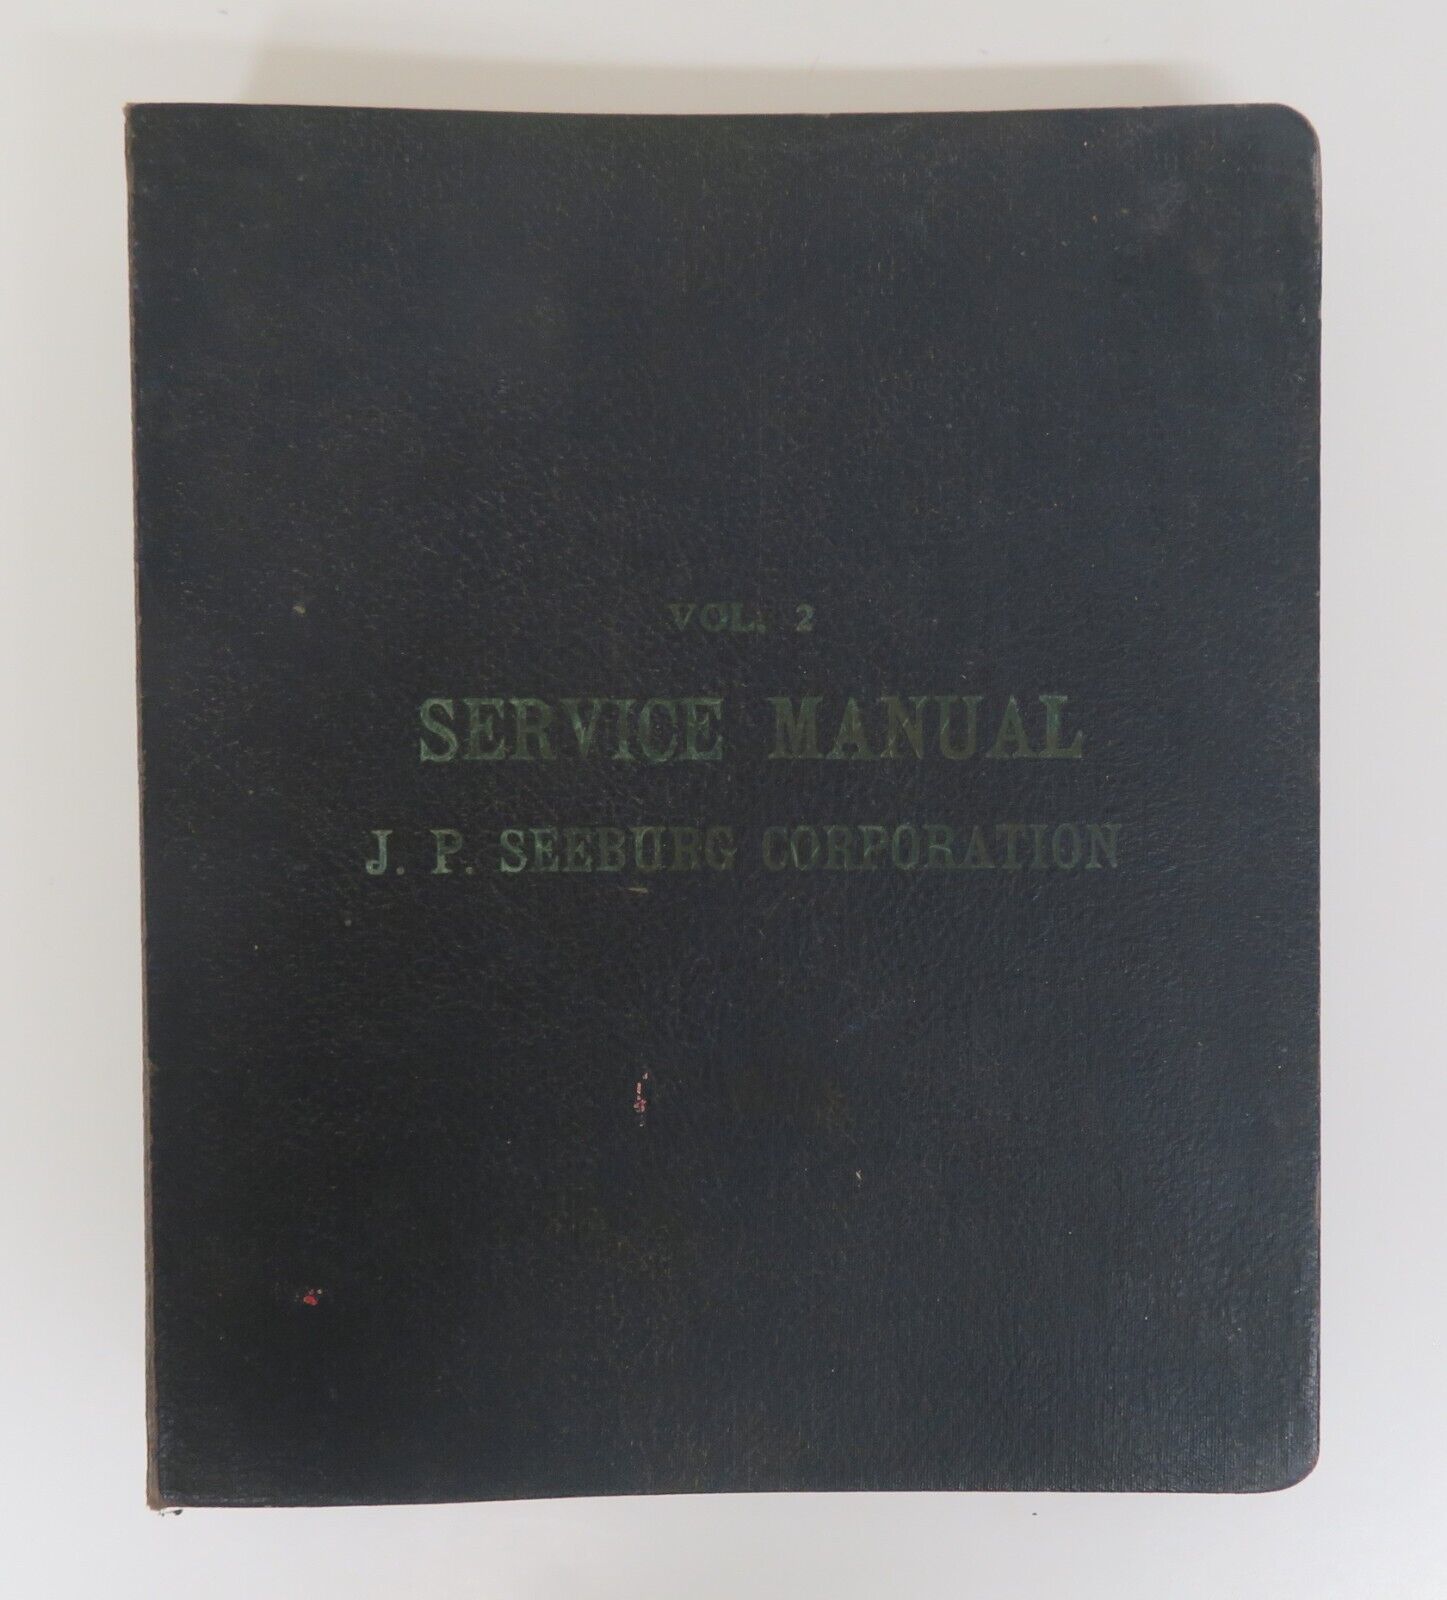 J. P. Seeburg Corporation Volume 2 Service Manual